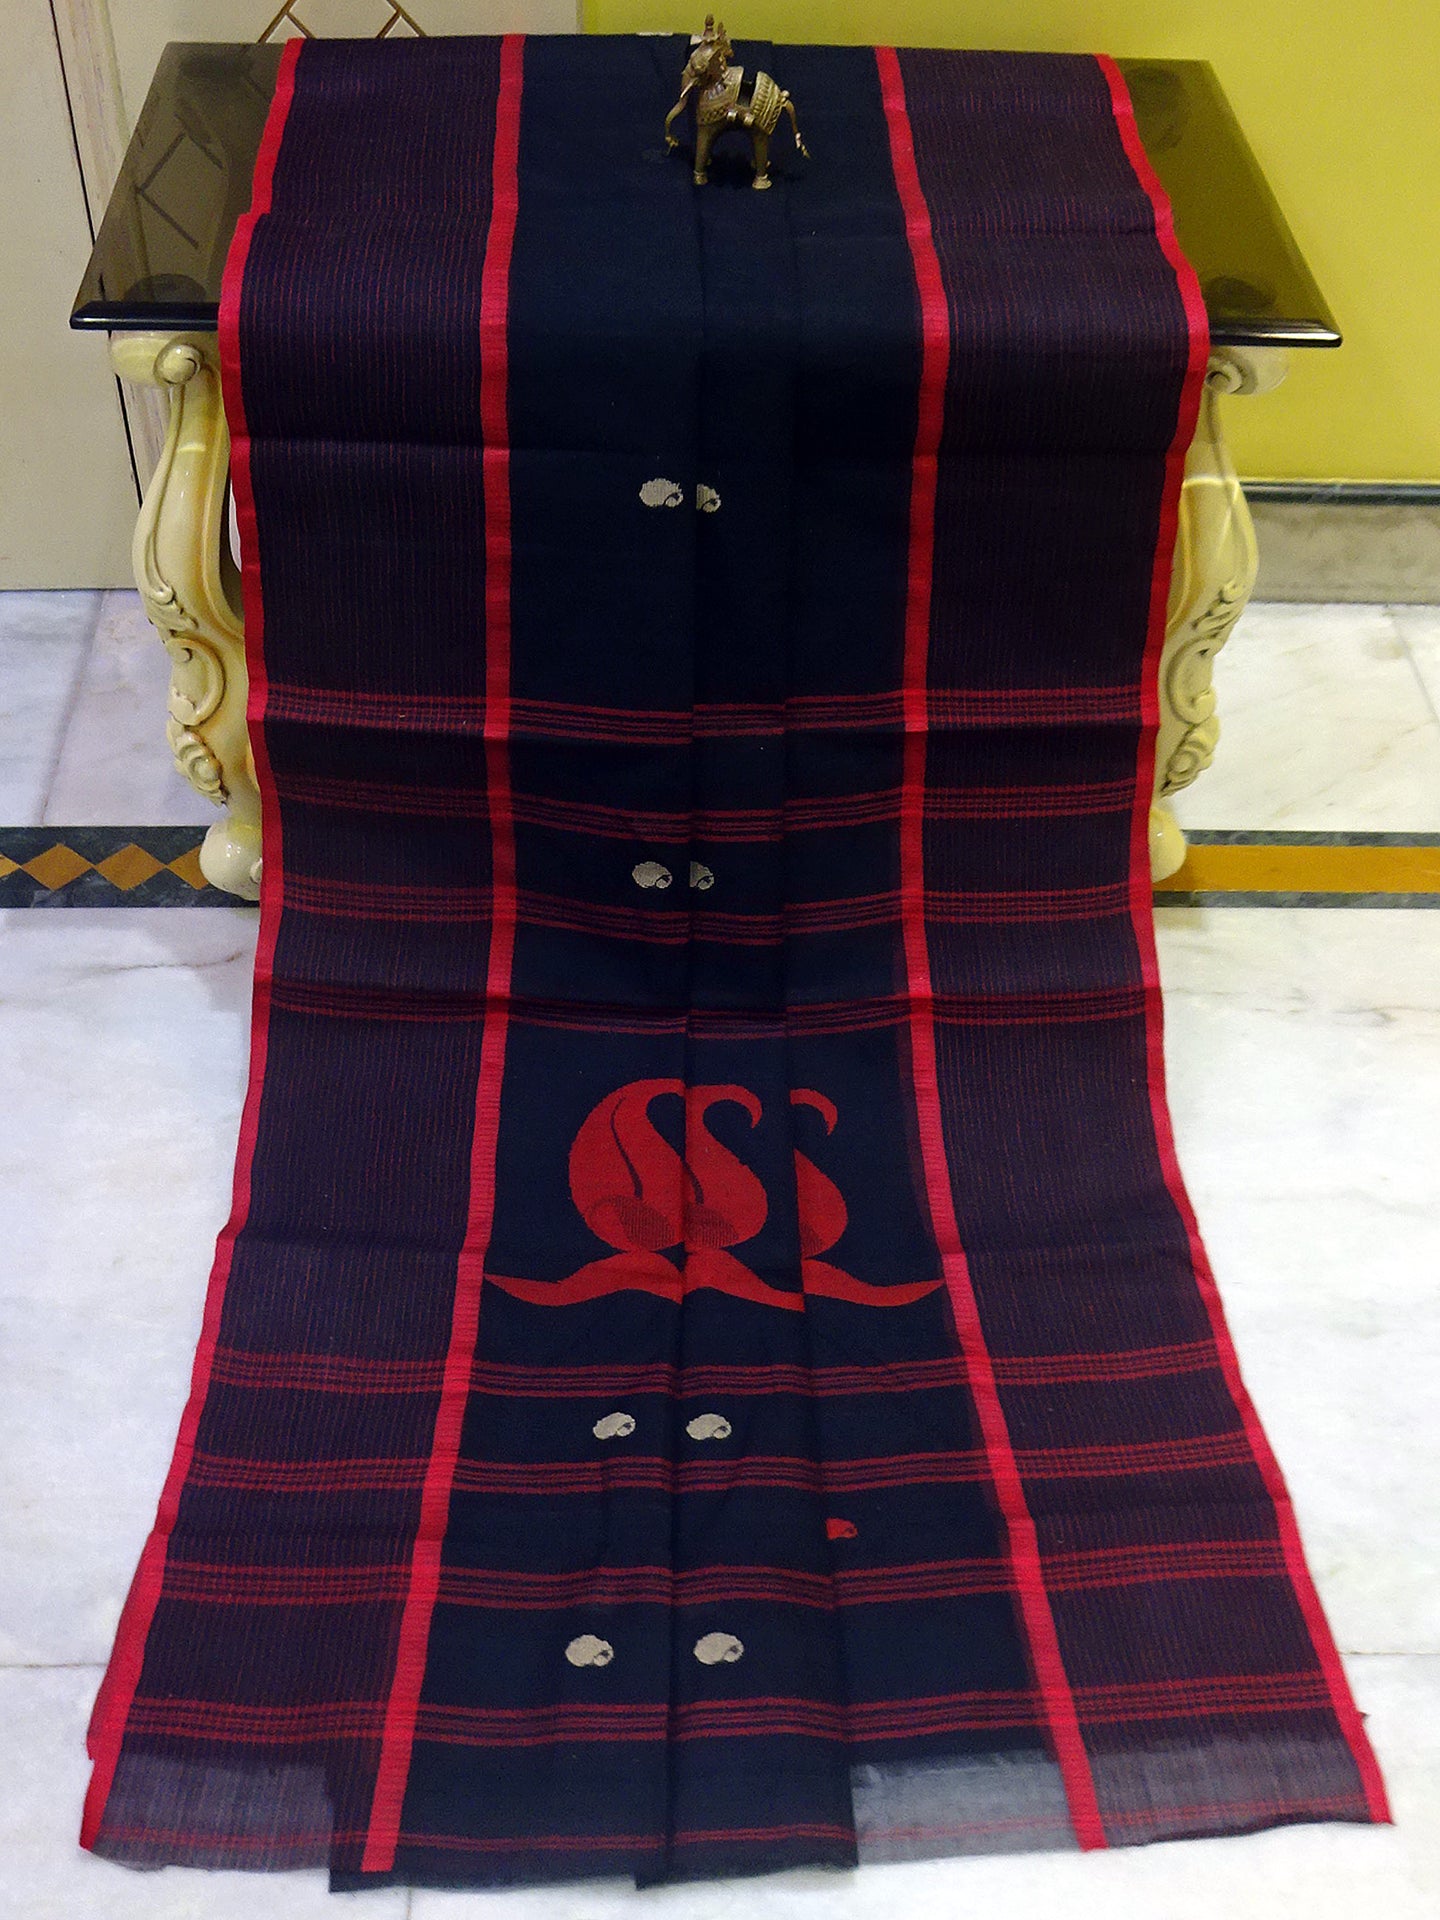 Premium Quality Bengal Handloom Cotton Saree in Black, Red and Beige